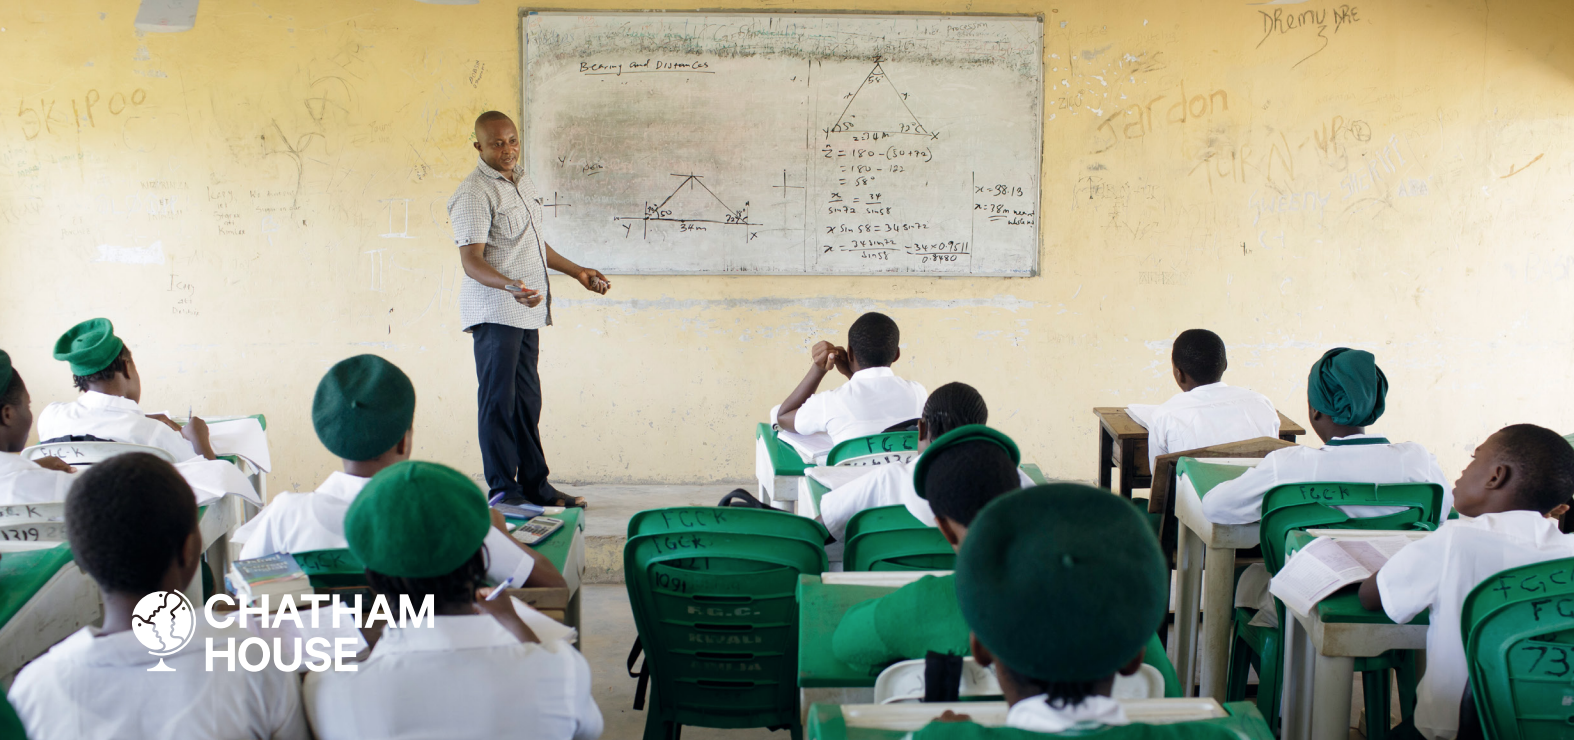 Pass-mark bribery in Nigerian schools